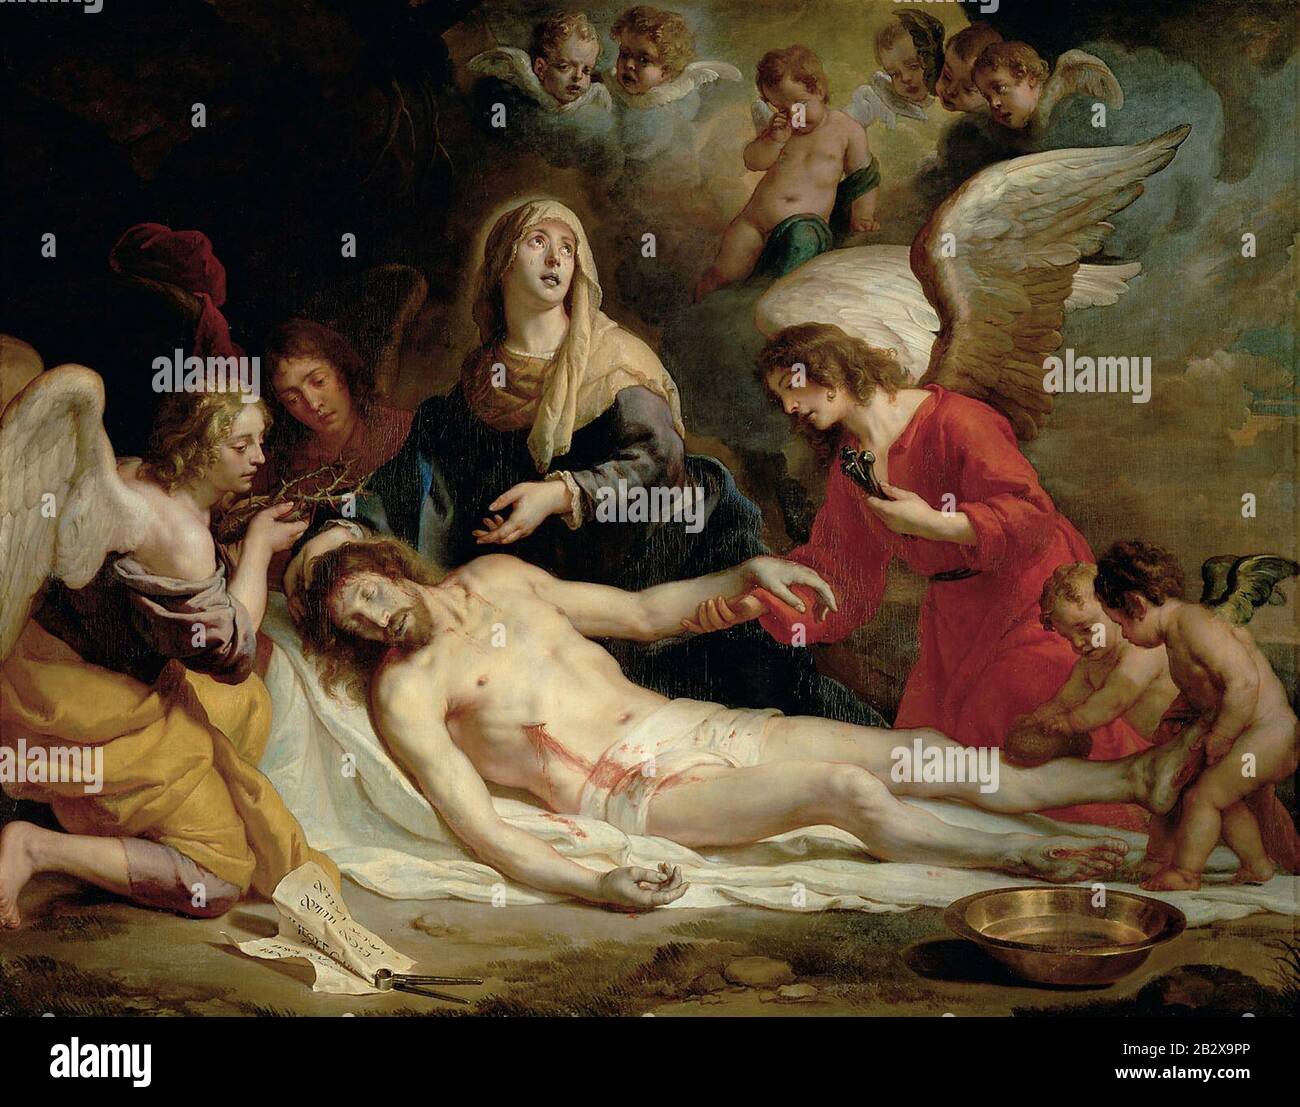 Gaspar de Crayer - Lamentation of Christ. Stock Photo